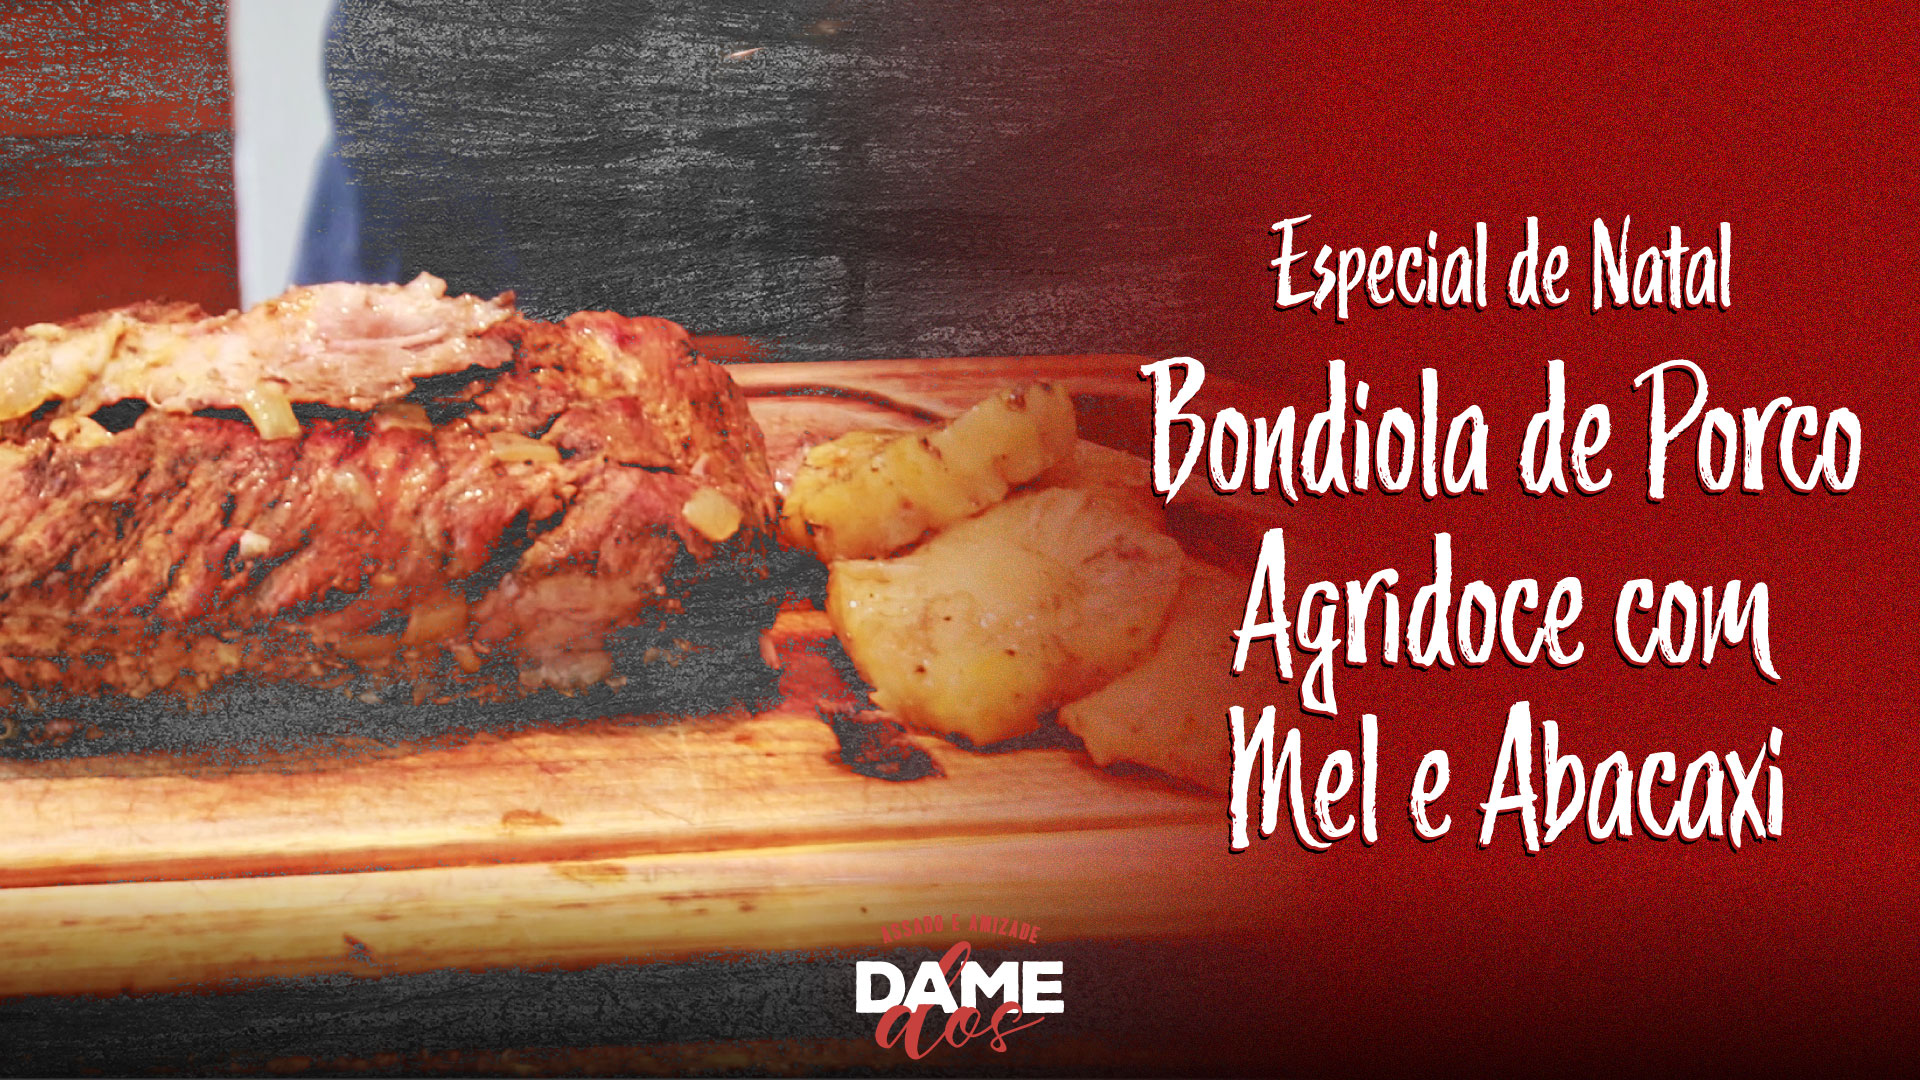 You are currently viewing Especial de Natal: Bondiola de Porco Agridoce com Mel e Abacaxi